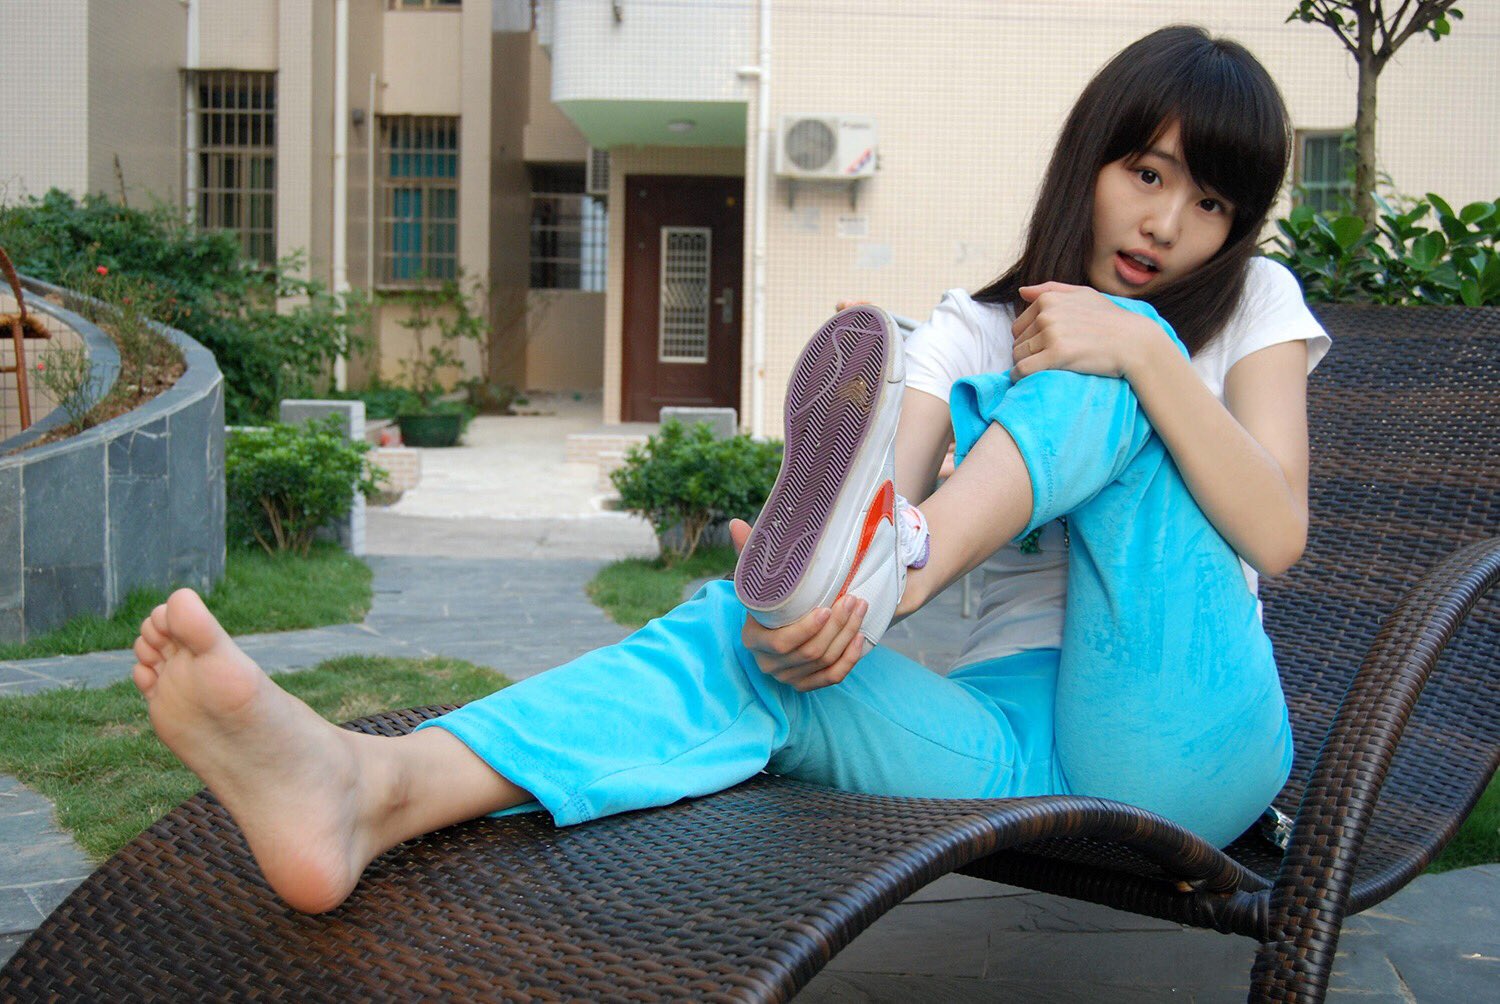 pretty asian feet 👣 👣 en Twitter: "#footfetish #footworship 